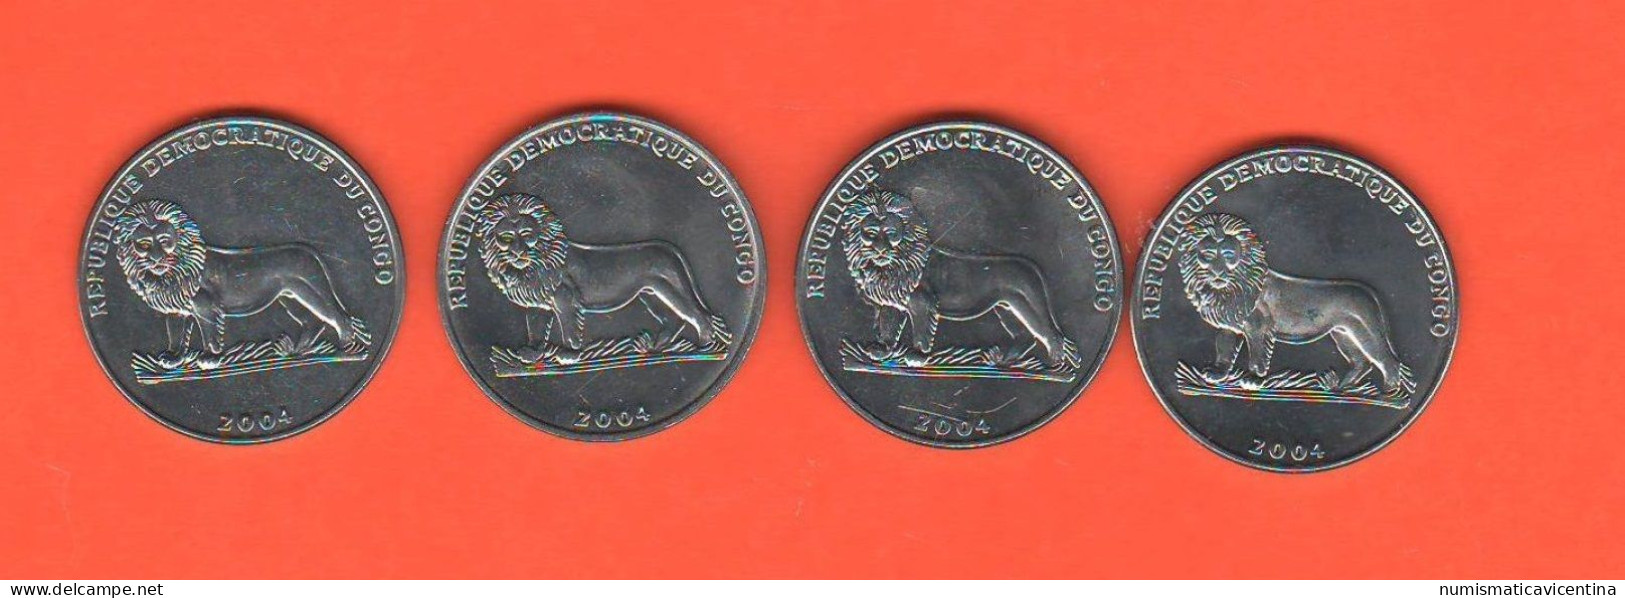 Congo 4 X 1 Franc 2004 Democratic République Démocratique Du Congo - Congo (Repubblica Democratica 1998)